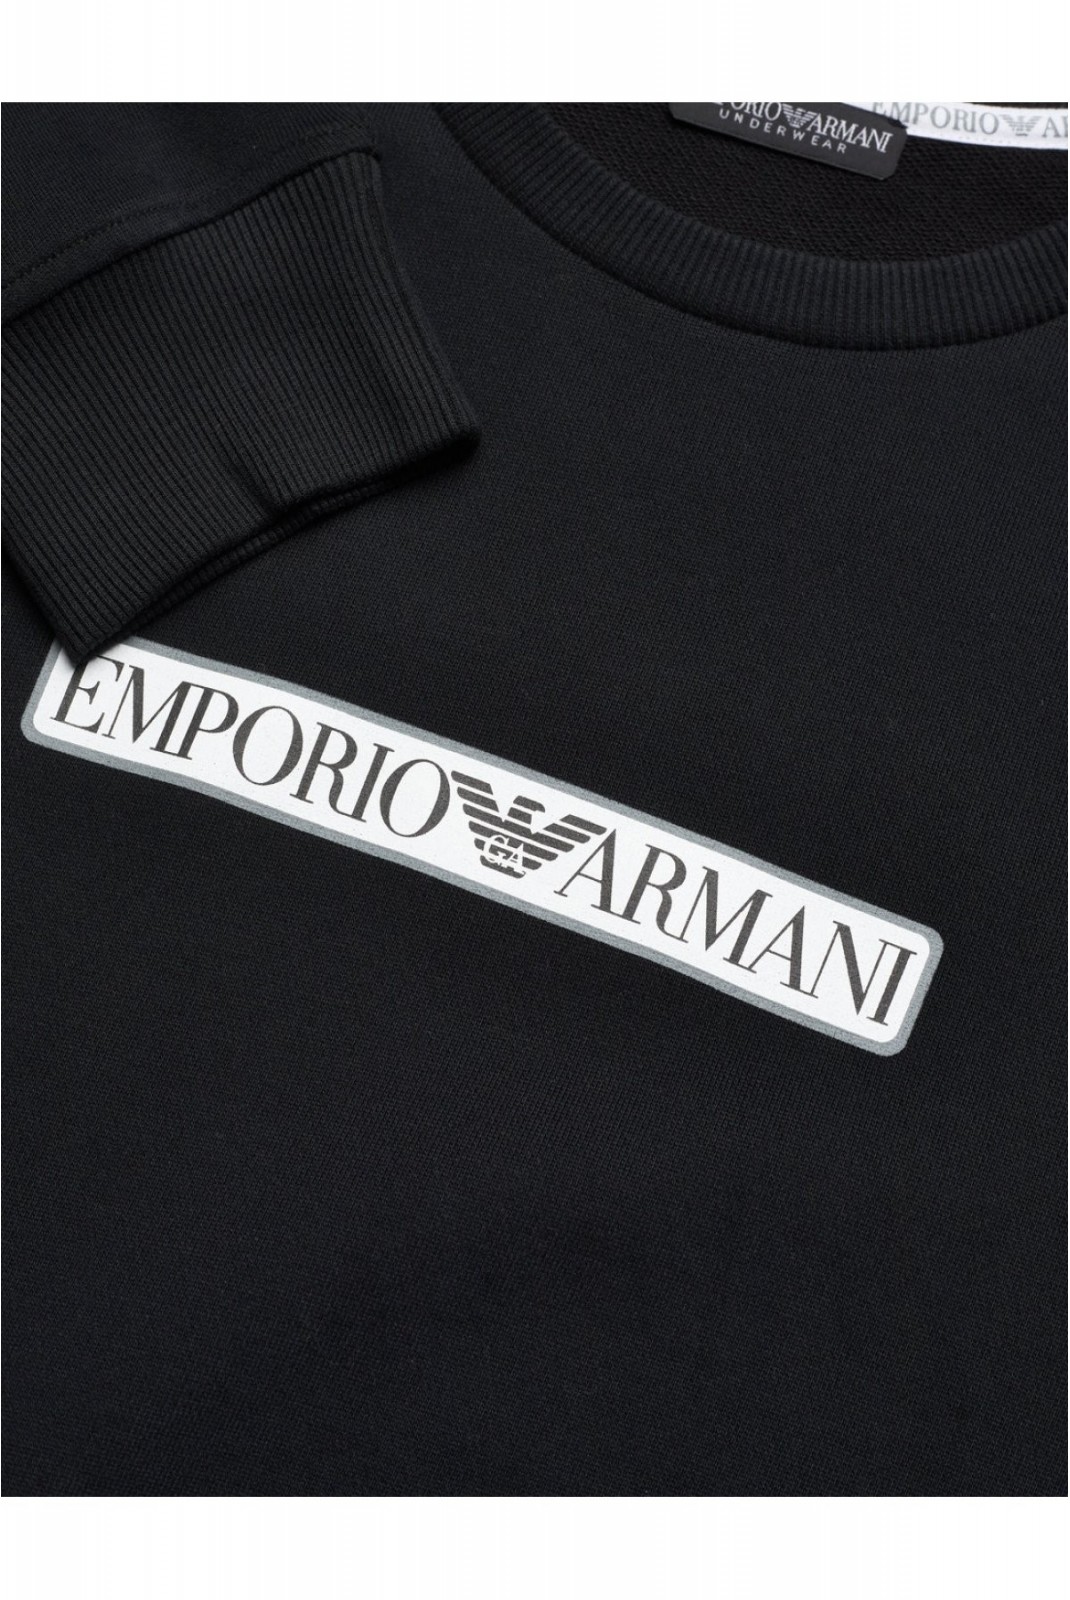 Sweat léger 100% coton logo printé Emporio armani 00020 NERO 111785 3F573